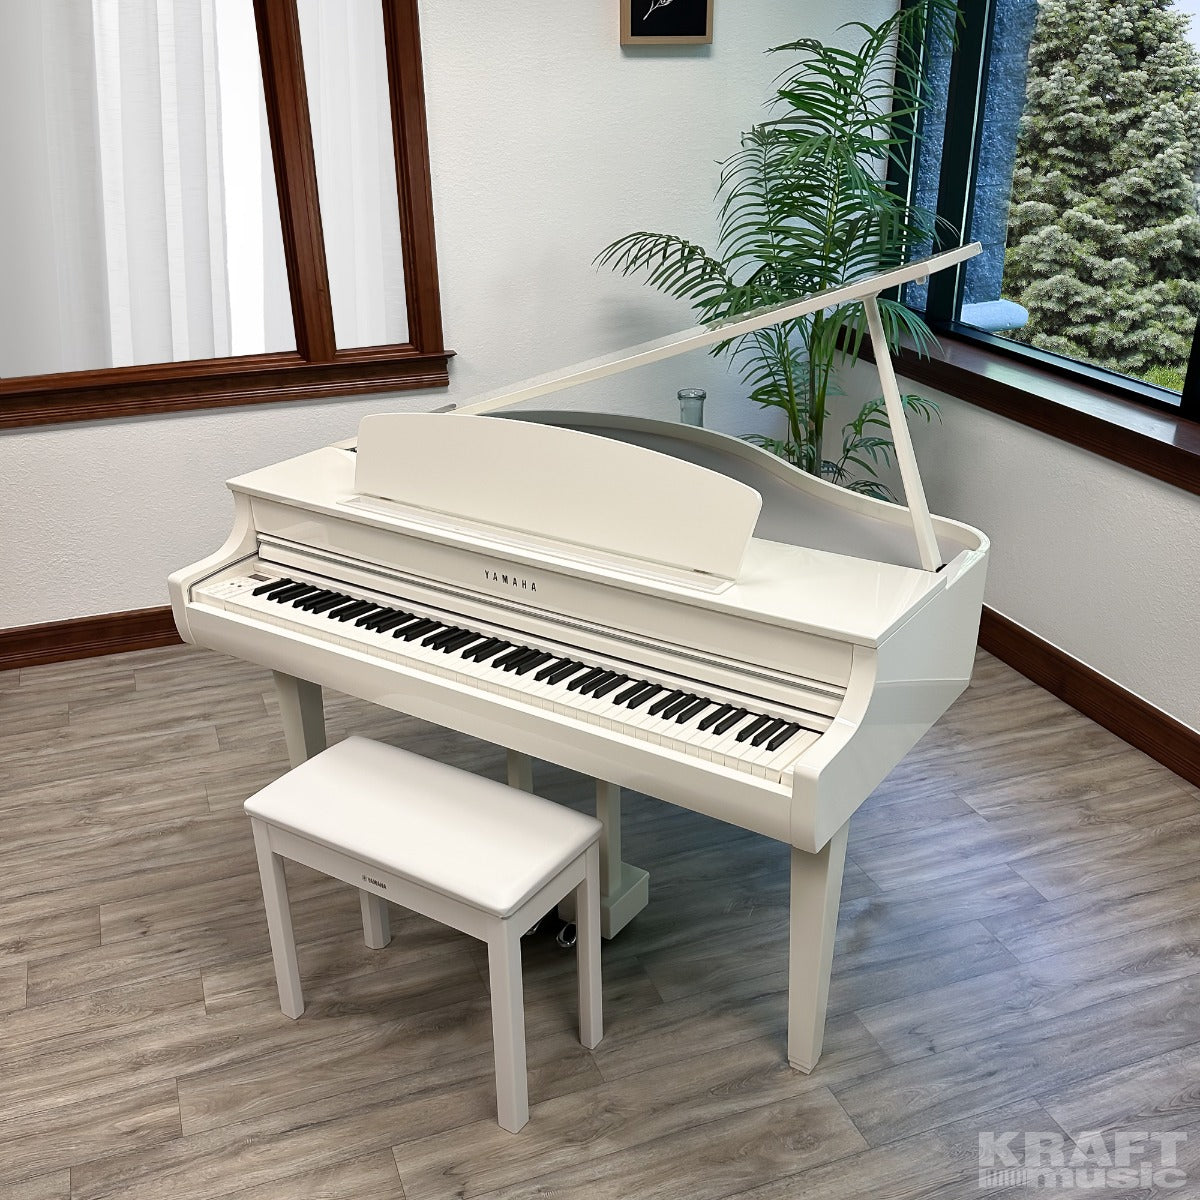 Yamaha Clavinova CLP-765GP Digital Piano - Polished White - Left angle from higher up